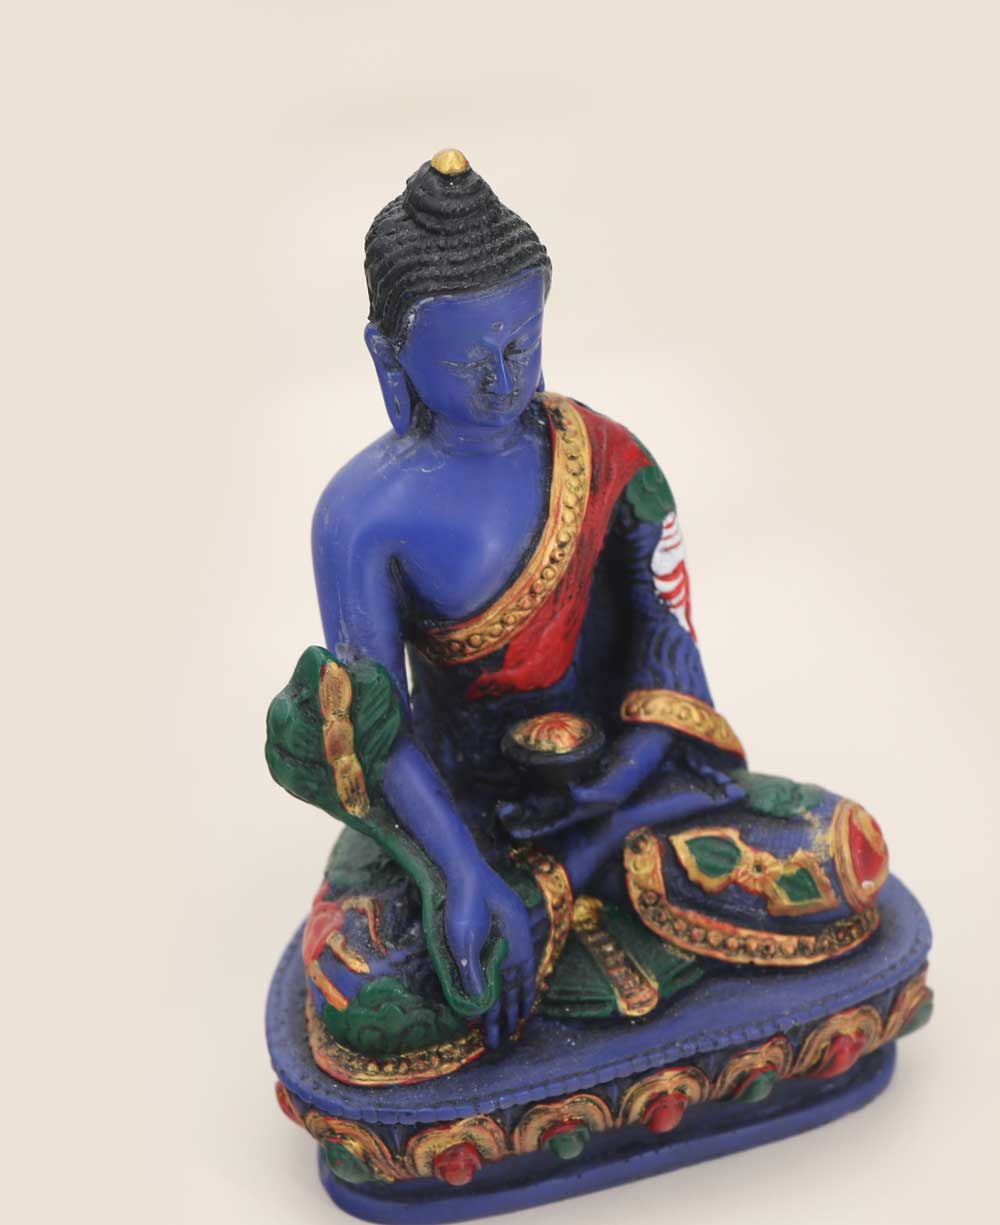 IMP – Multicolored Blue Medicine Buddha Statue, 5.5 Inches - Sculptures & Statues